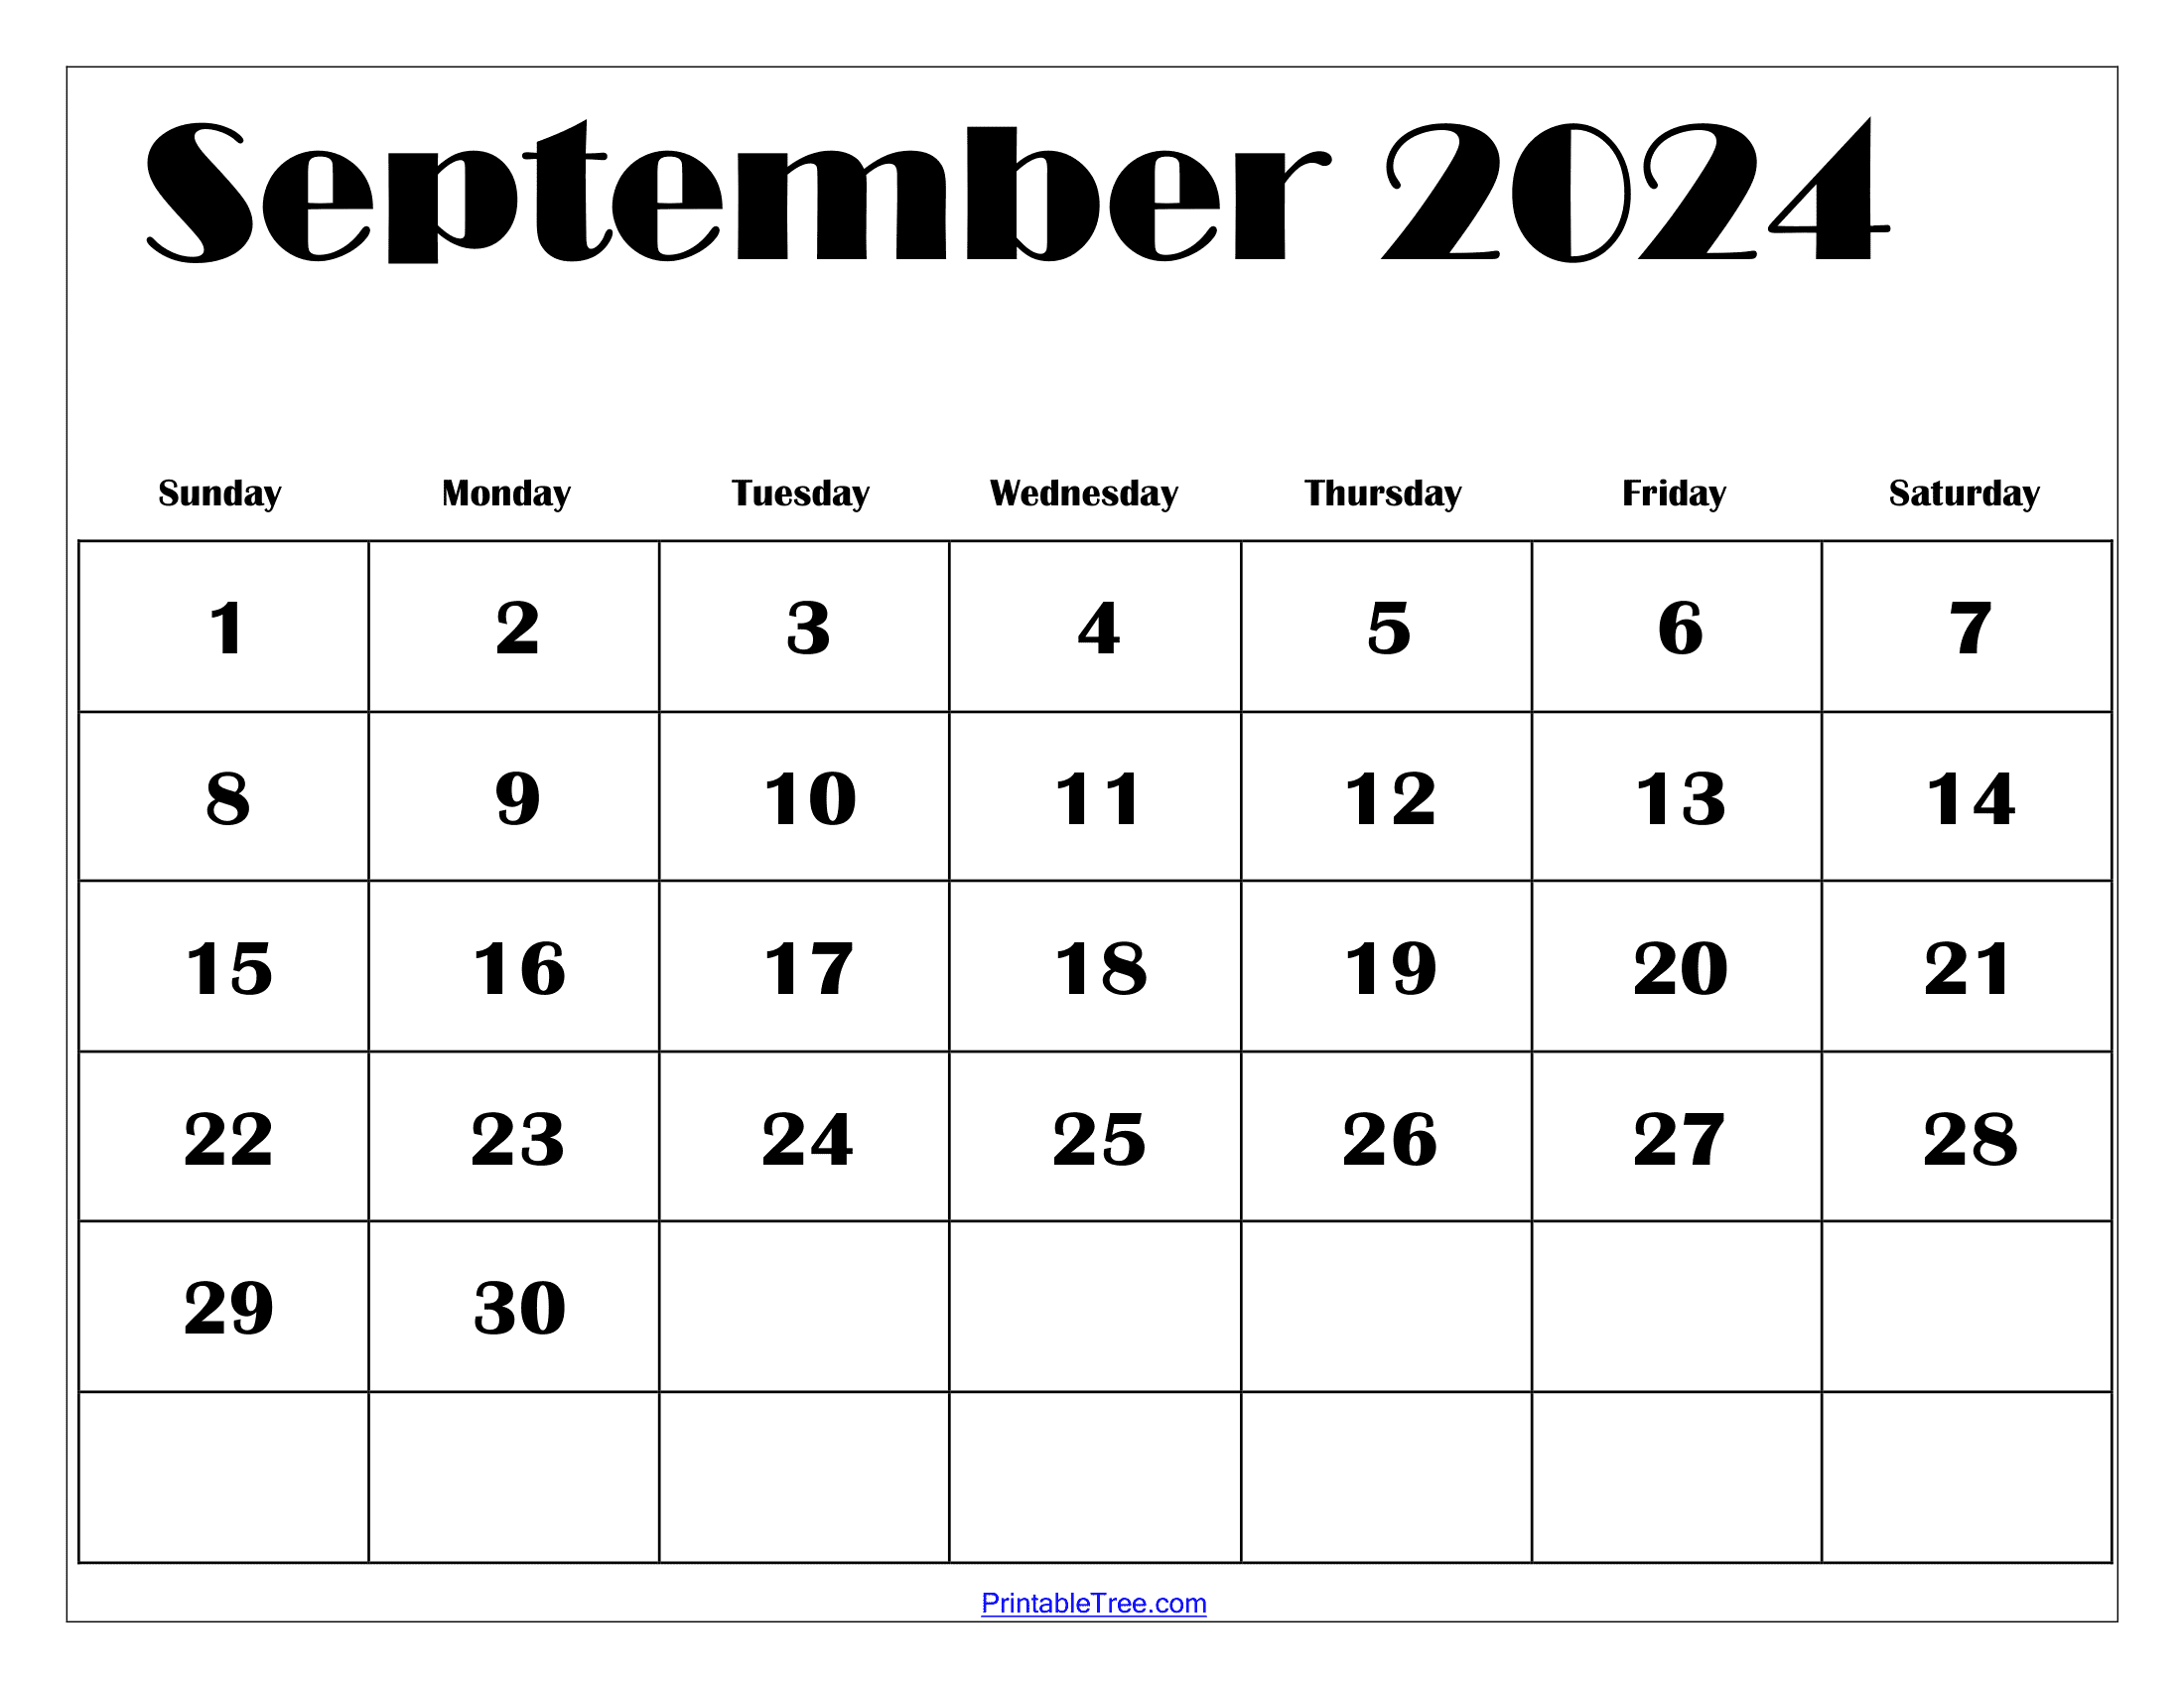 September 2024 Calendar Printable Pdf With Holidays for 2024 September Printable Calendar